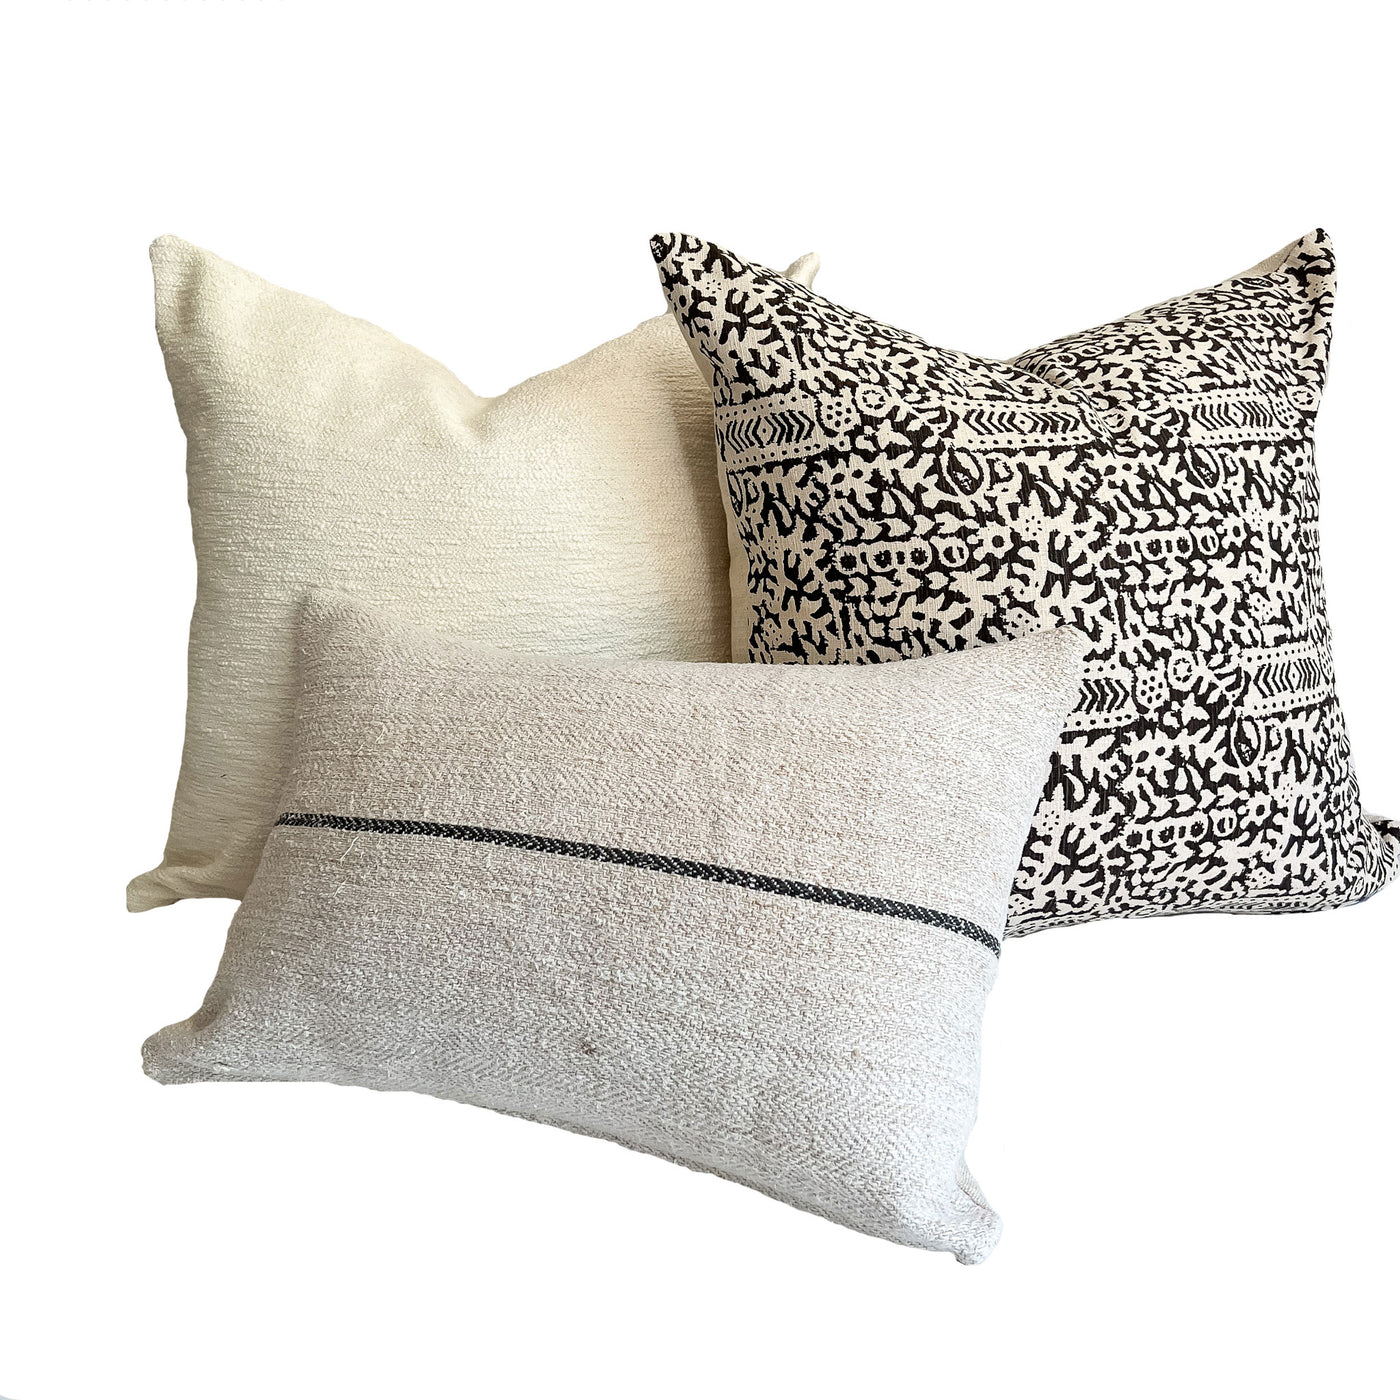 Studio Pillows | Pillow Combination #21 - Studio Pillows